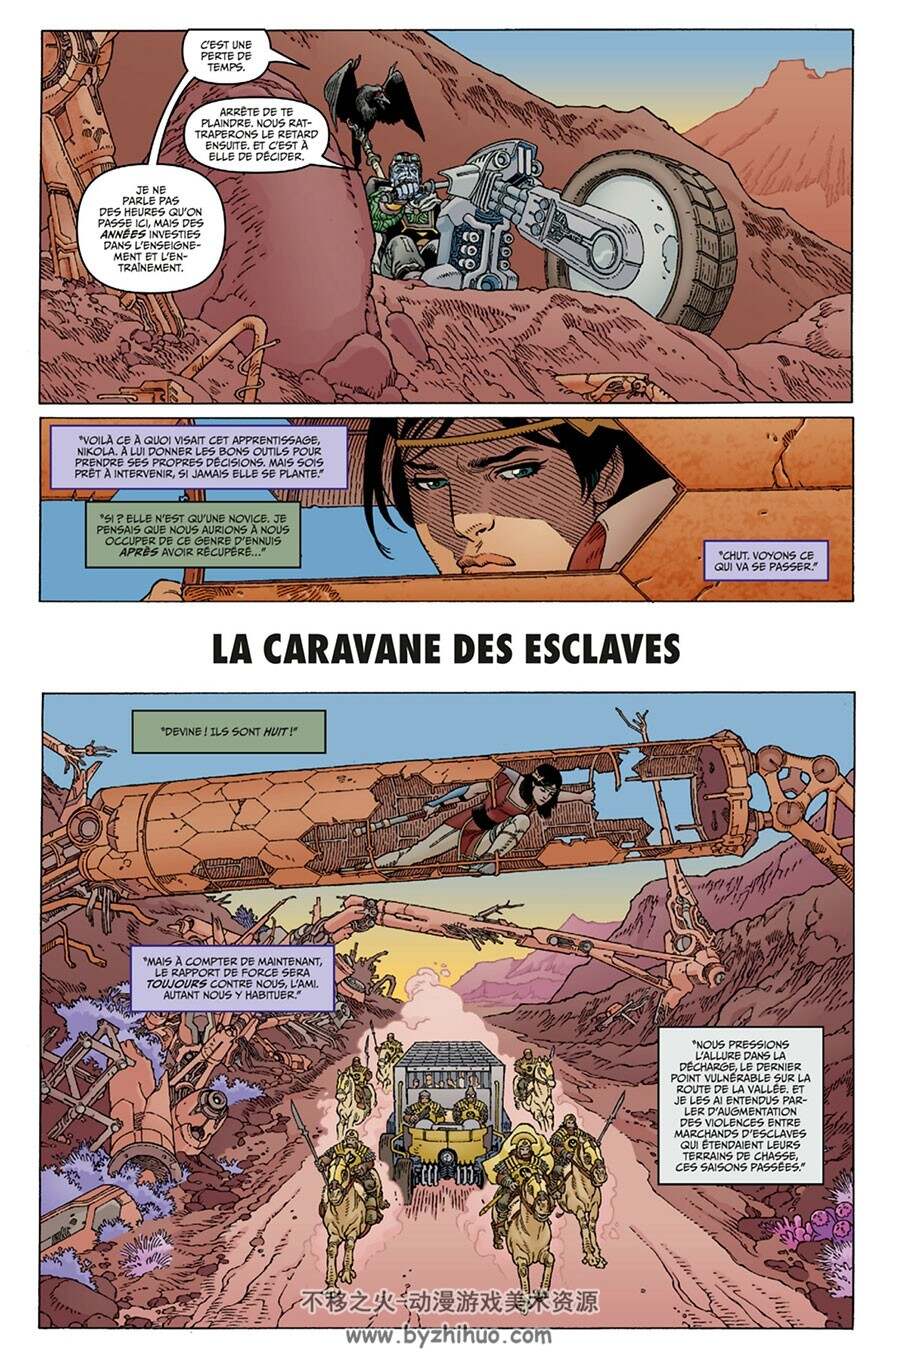 L'Epée Sacrée 全一册 Gabriel Rodriguez 欧美科幻奇幻彩色漫画